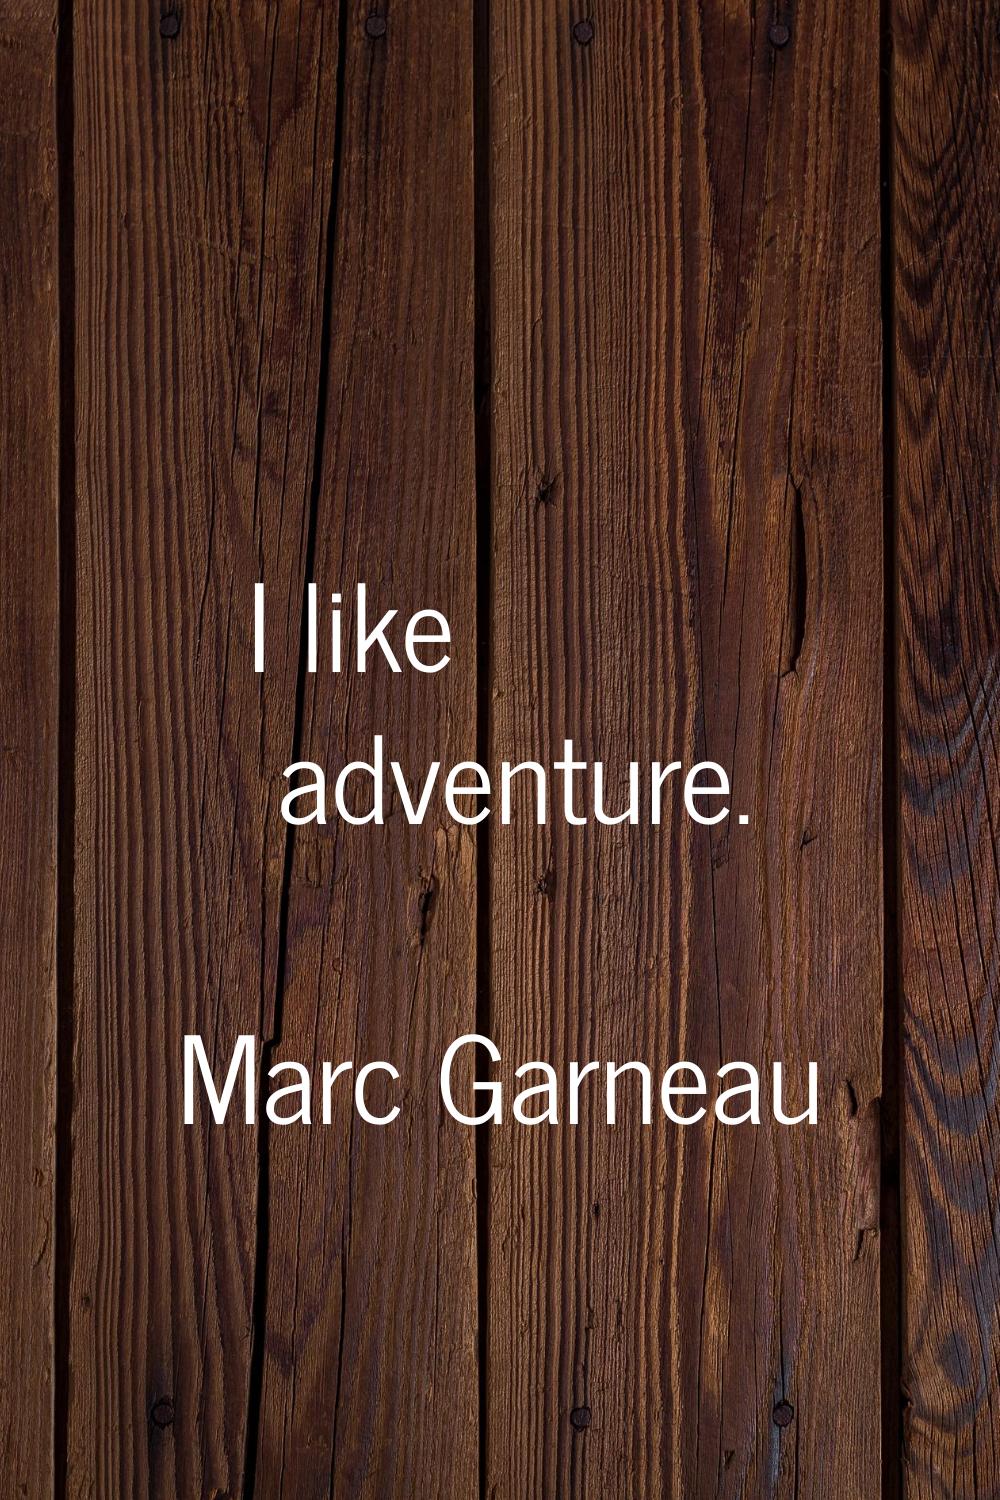 I like adventure.